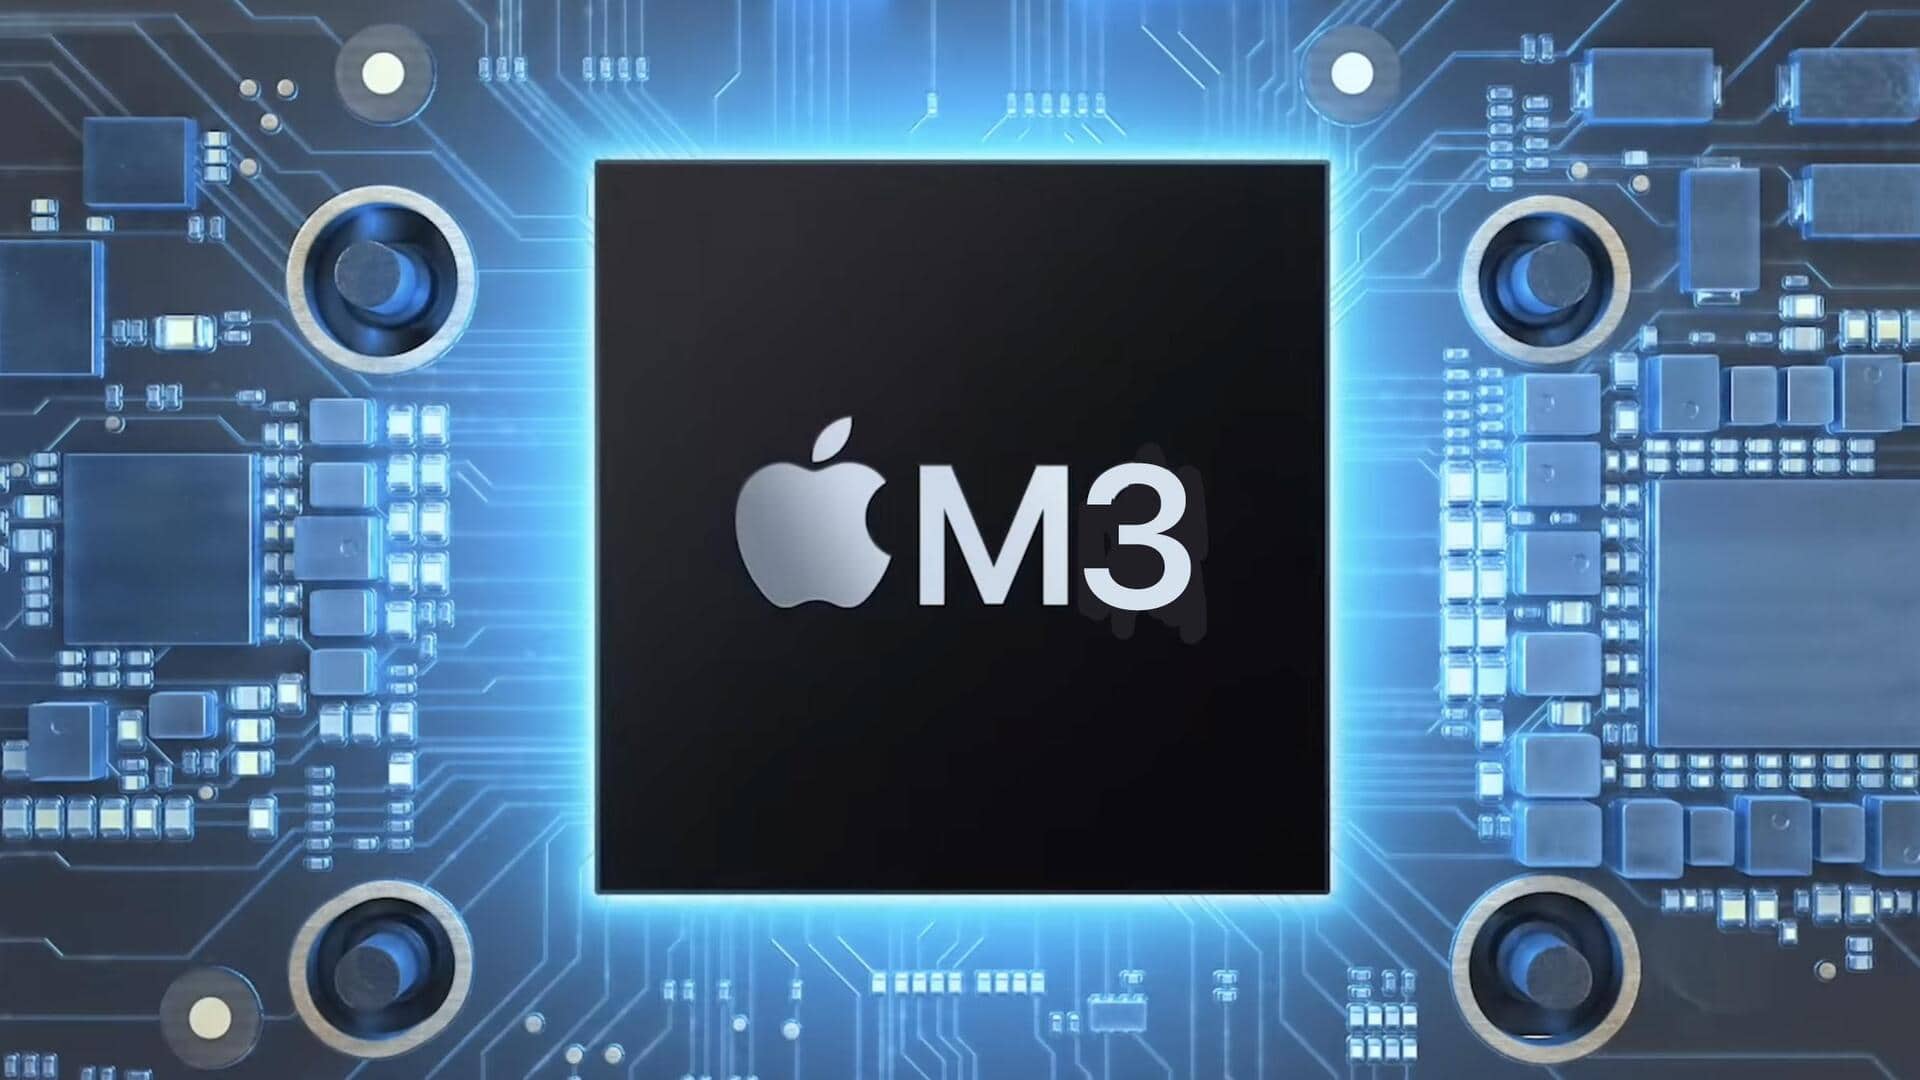 Apple M3 chips get big GPU upgrades for gaming